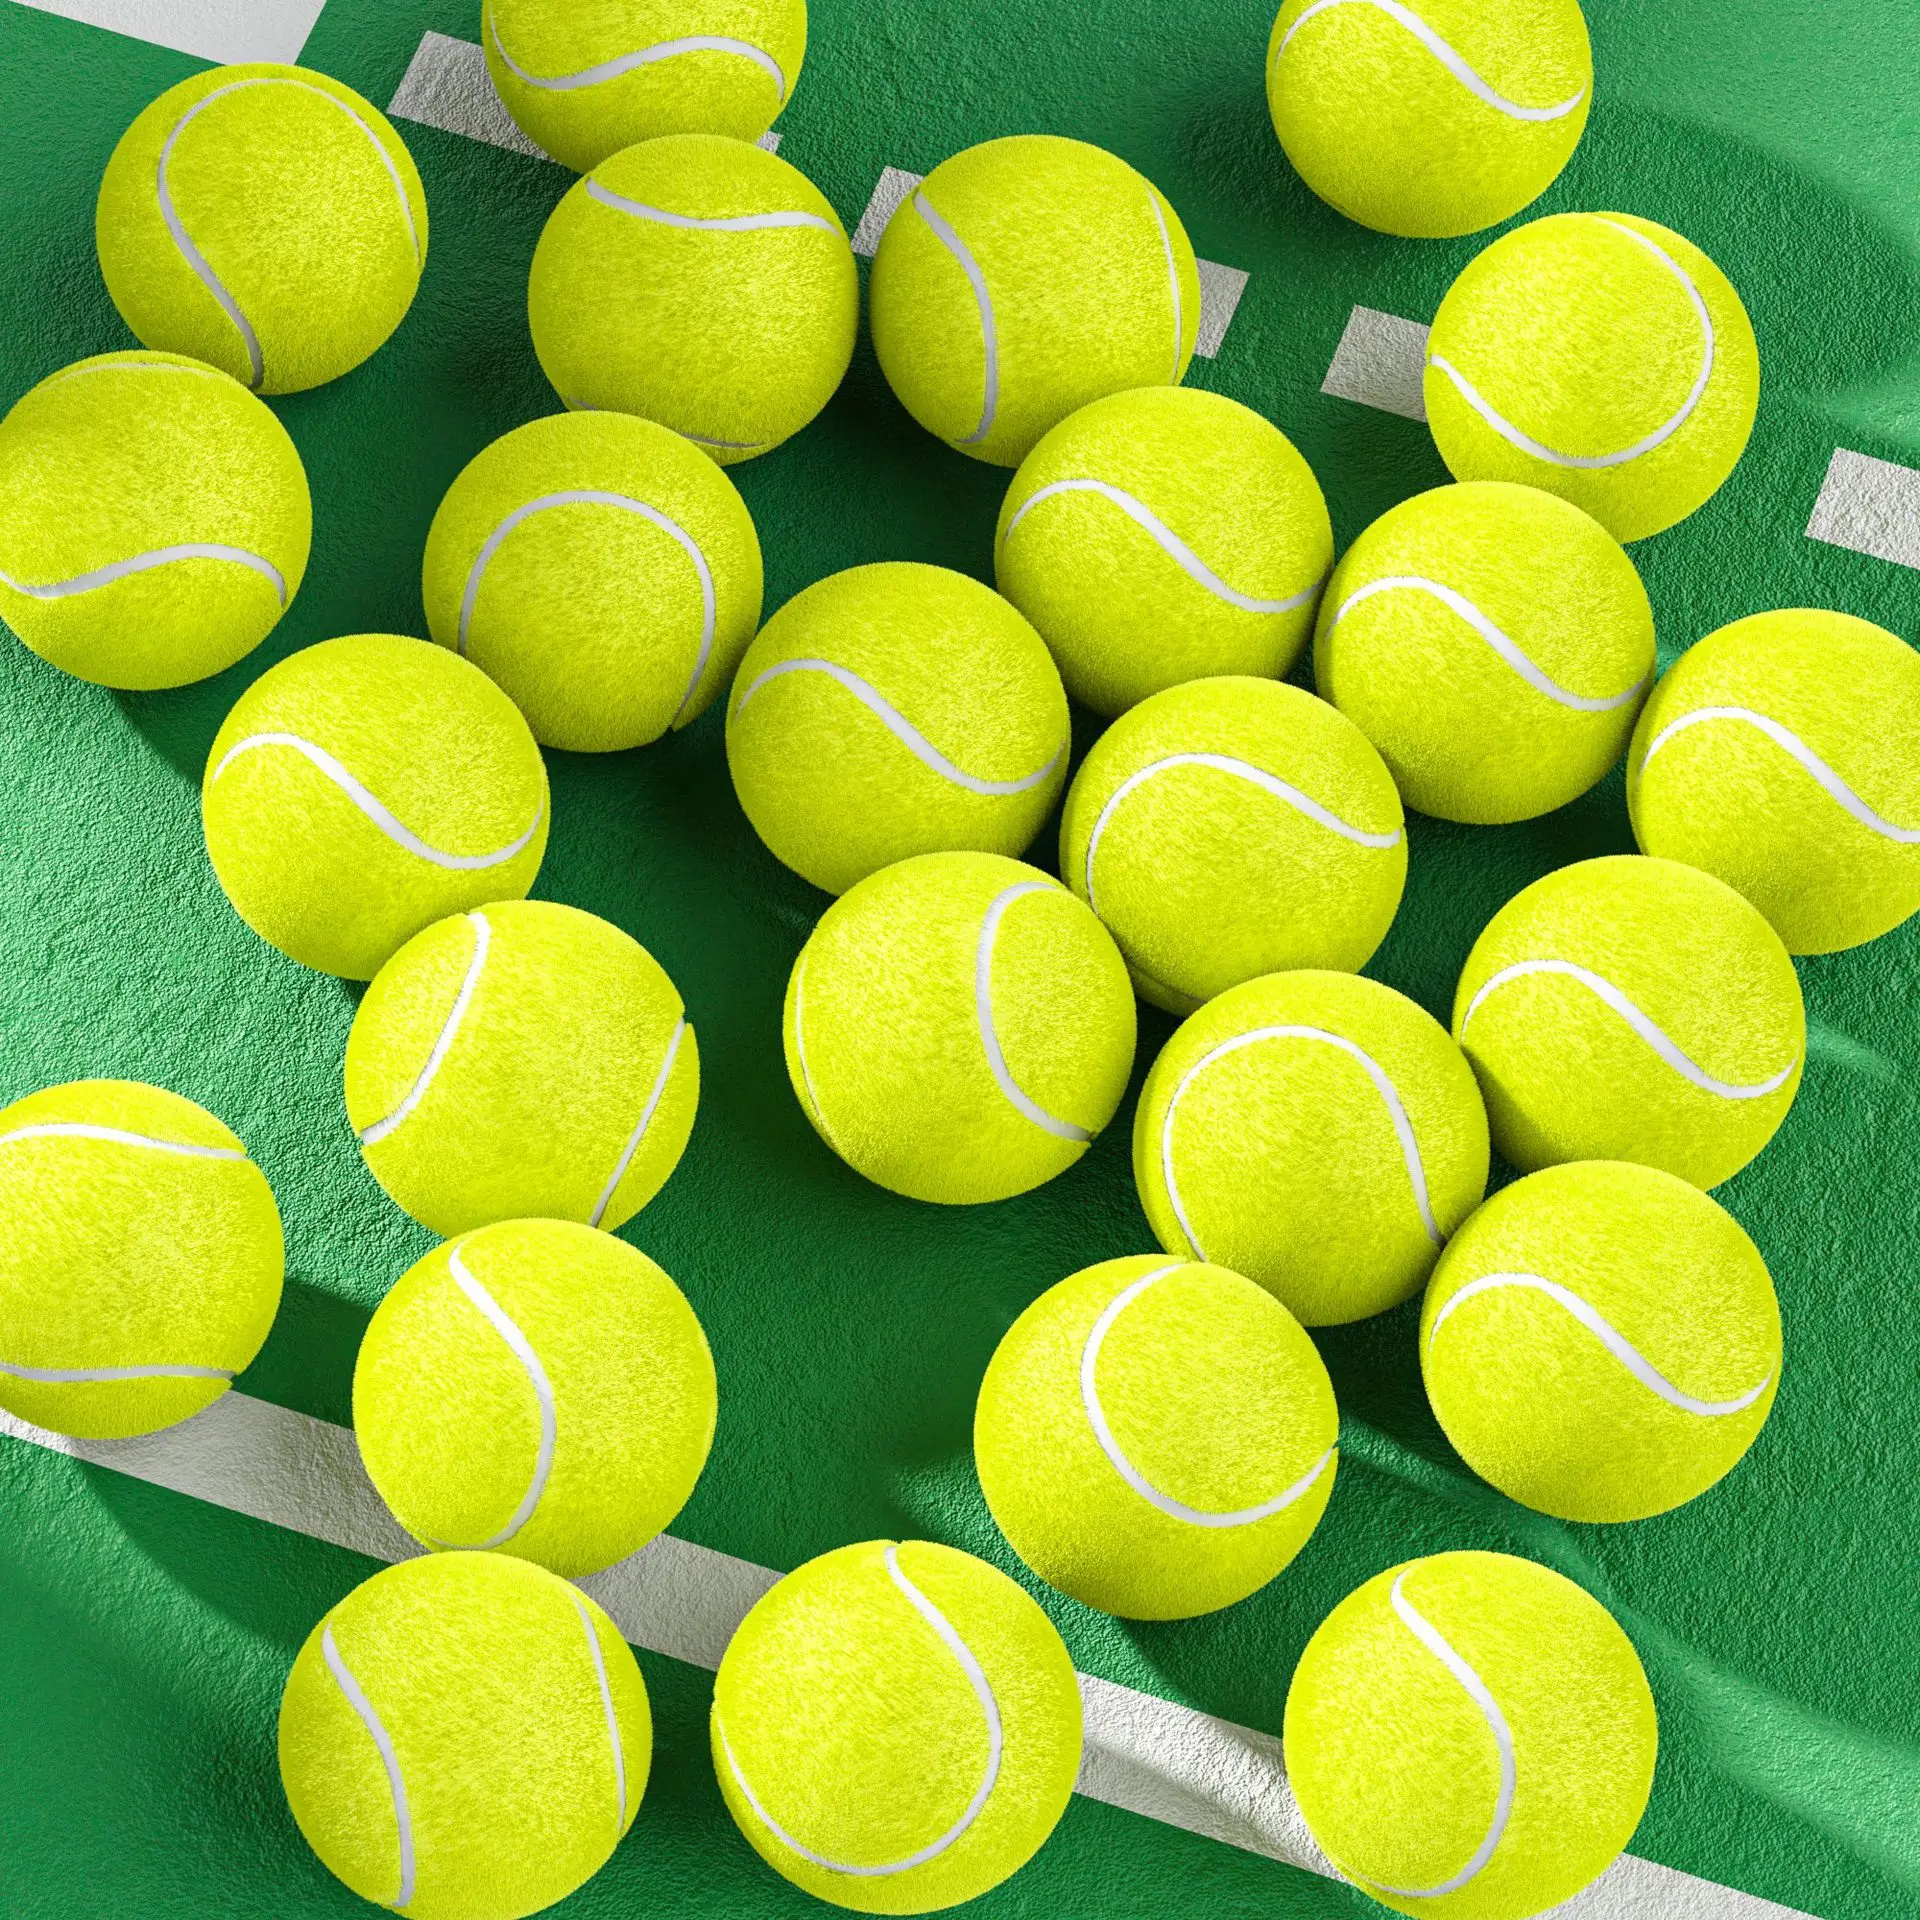 Professional training bulk tennis practice high elastic resistance to play wool fiber rubber